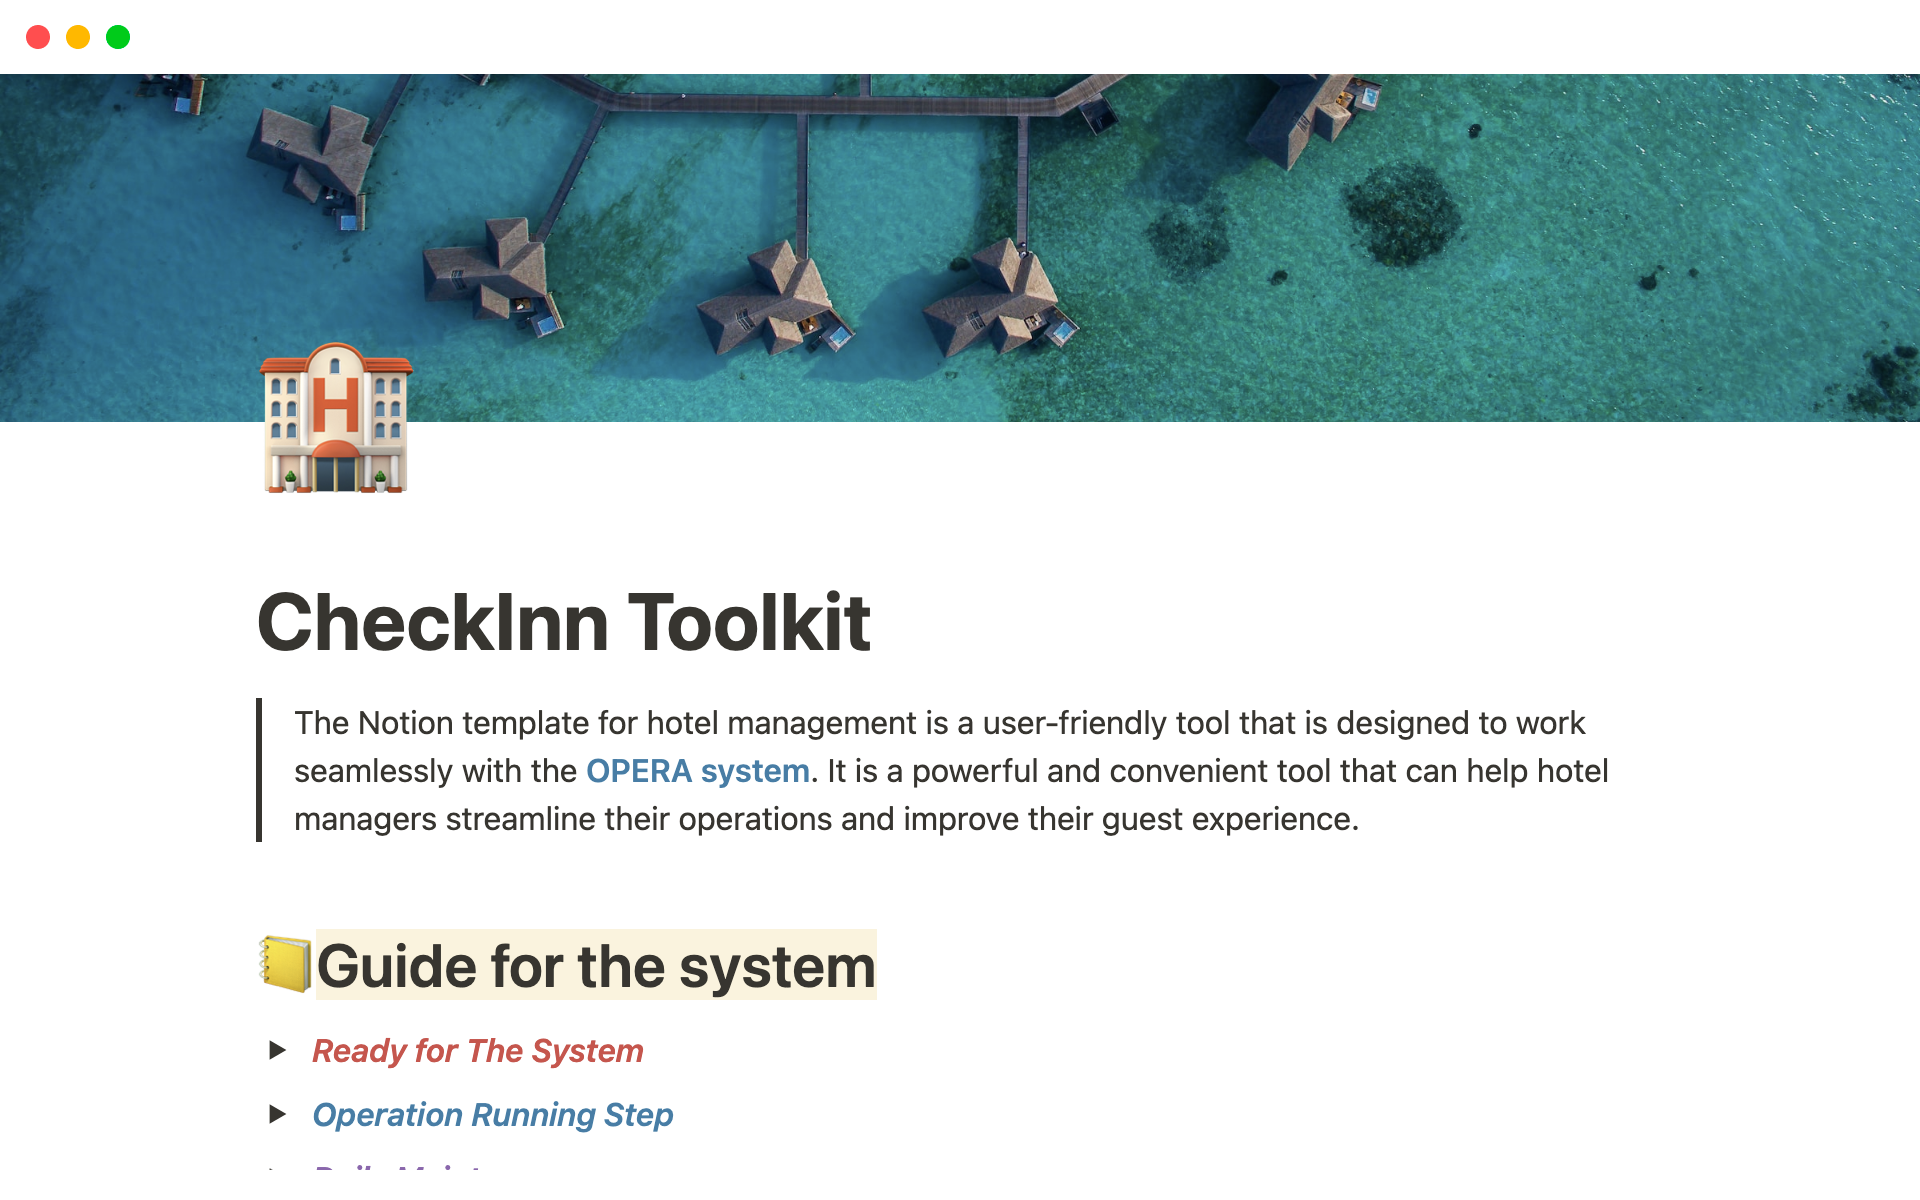 Aperçu du modèle de CheckInn Toolkit